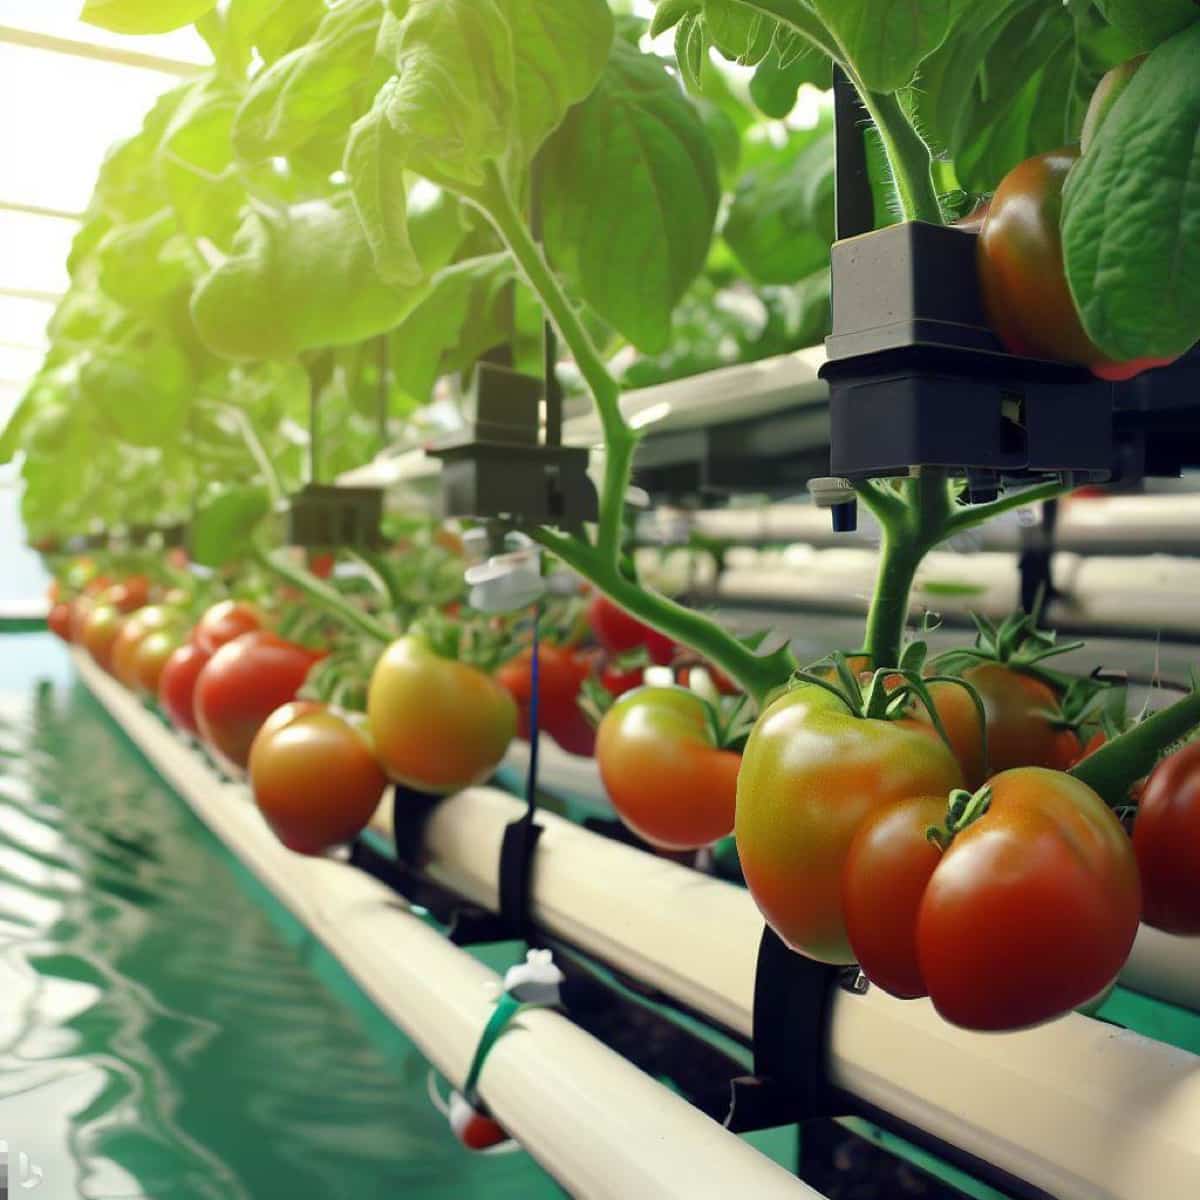 Growing Tomatoes Using Aquaponic Technology